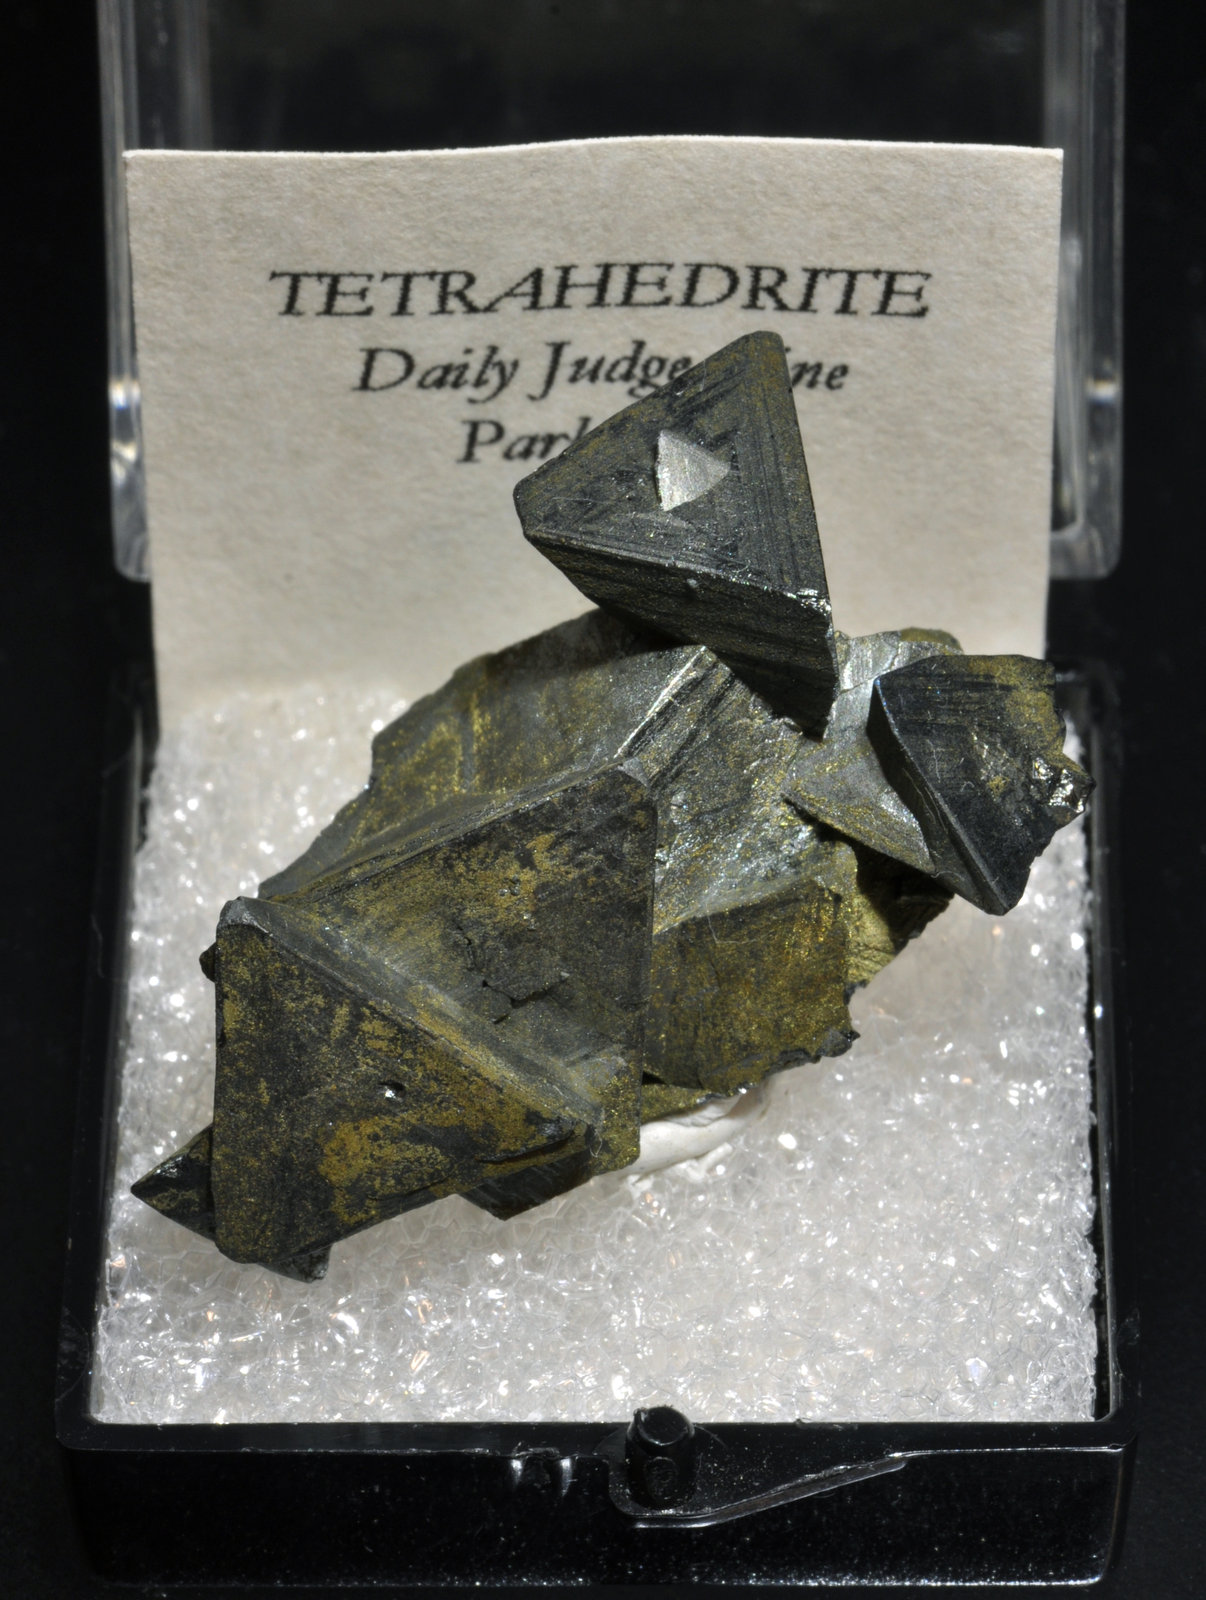 specimens/s_imagesAL4/Tetrahedrite-TF27AL4f1.jpg